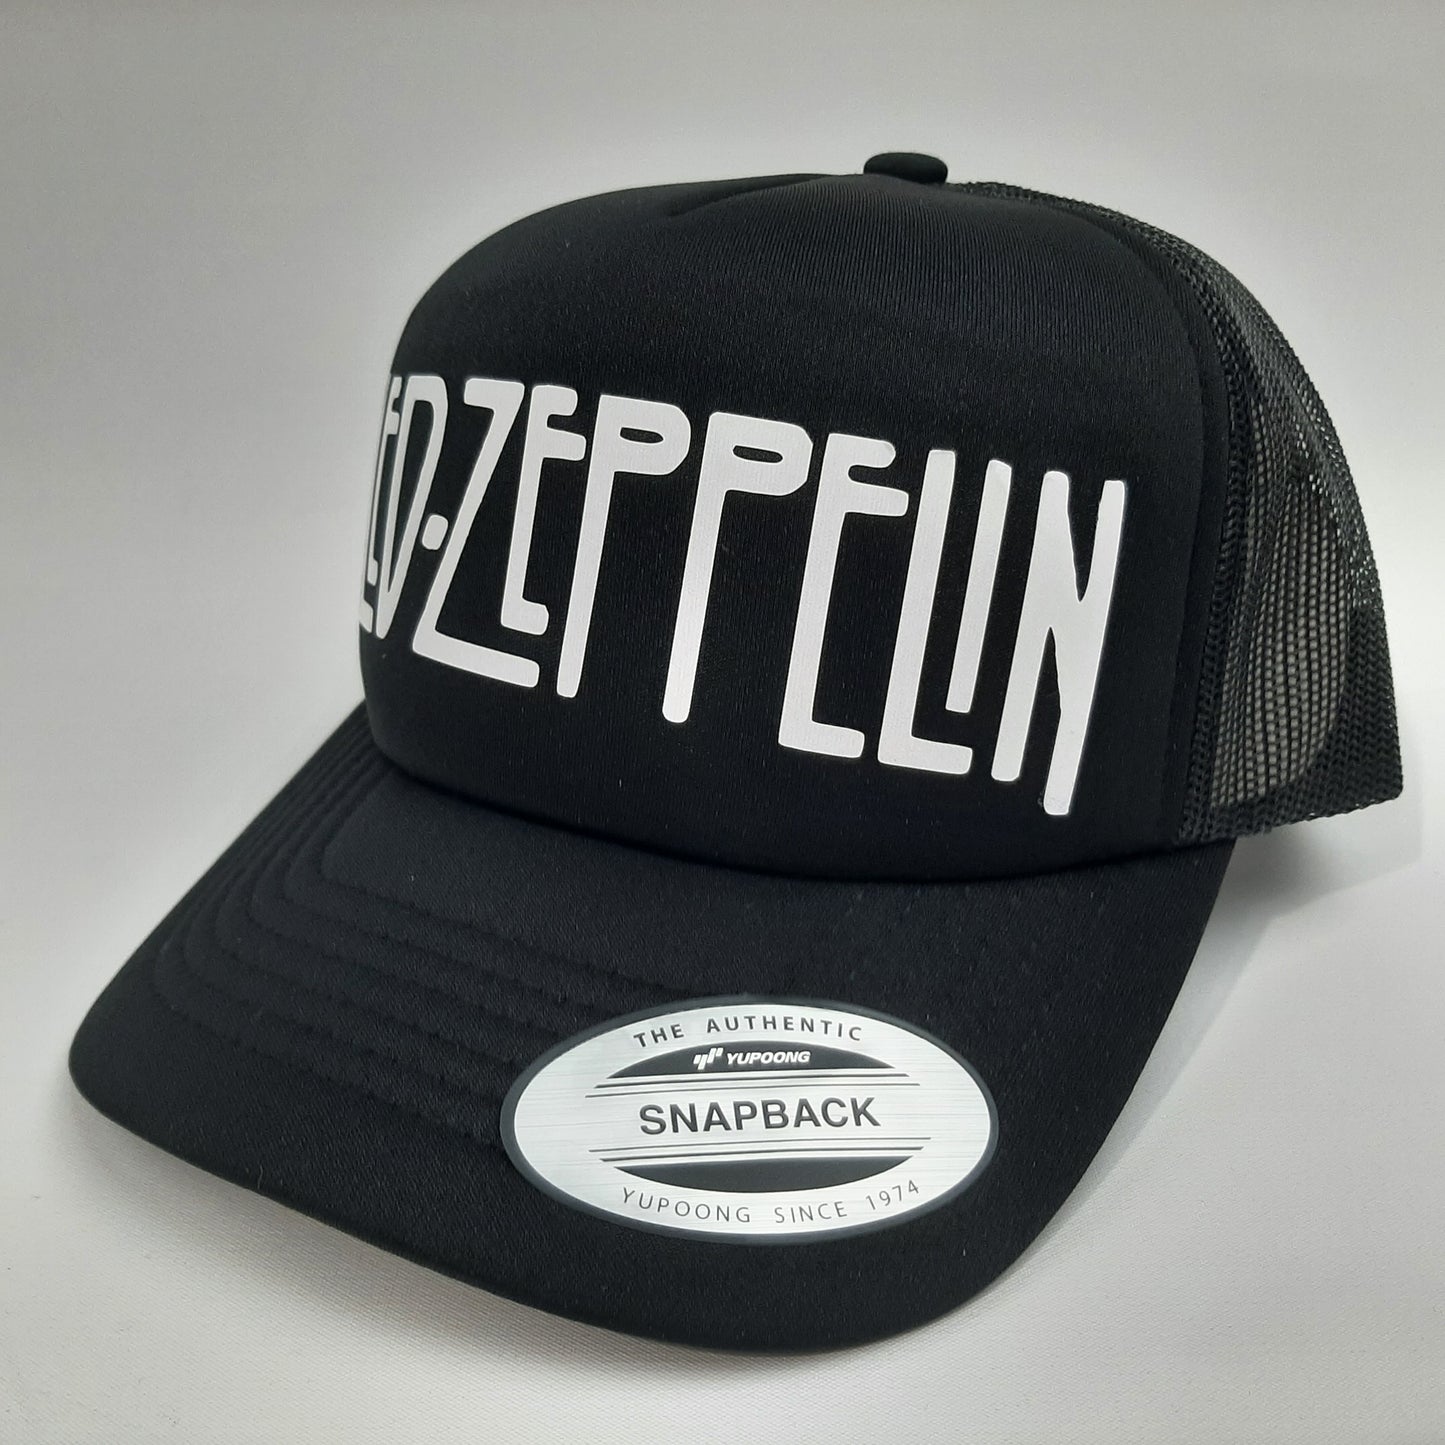 Led Zeppelin Foam Mesh Trucker Snapback Black